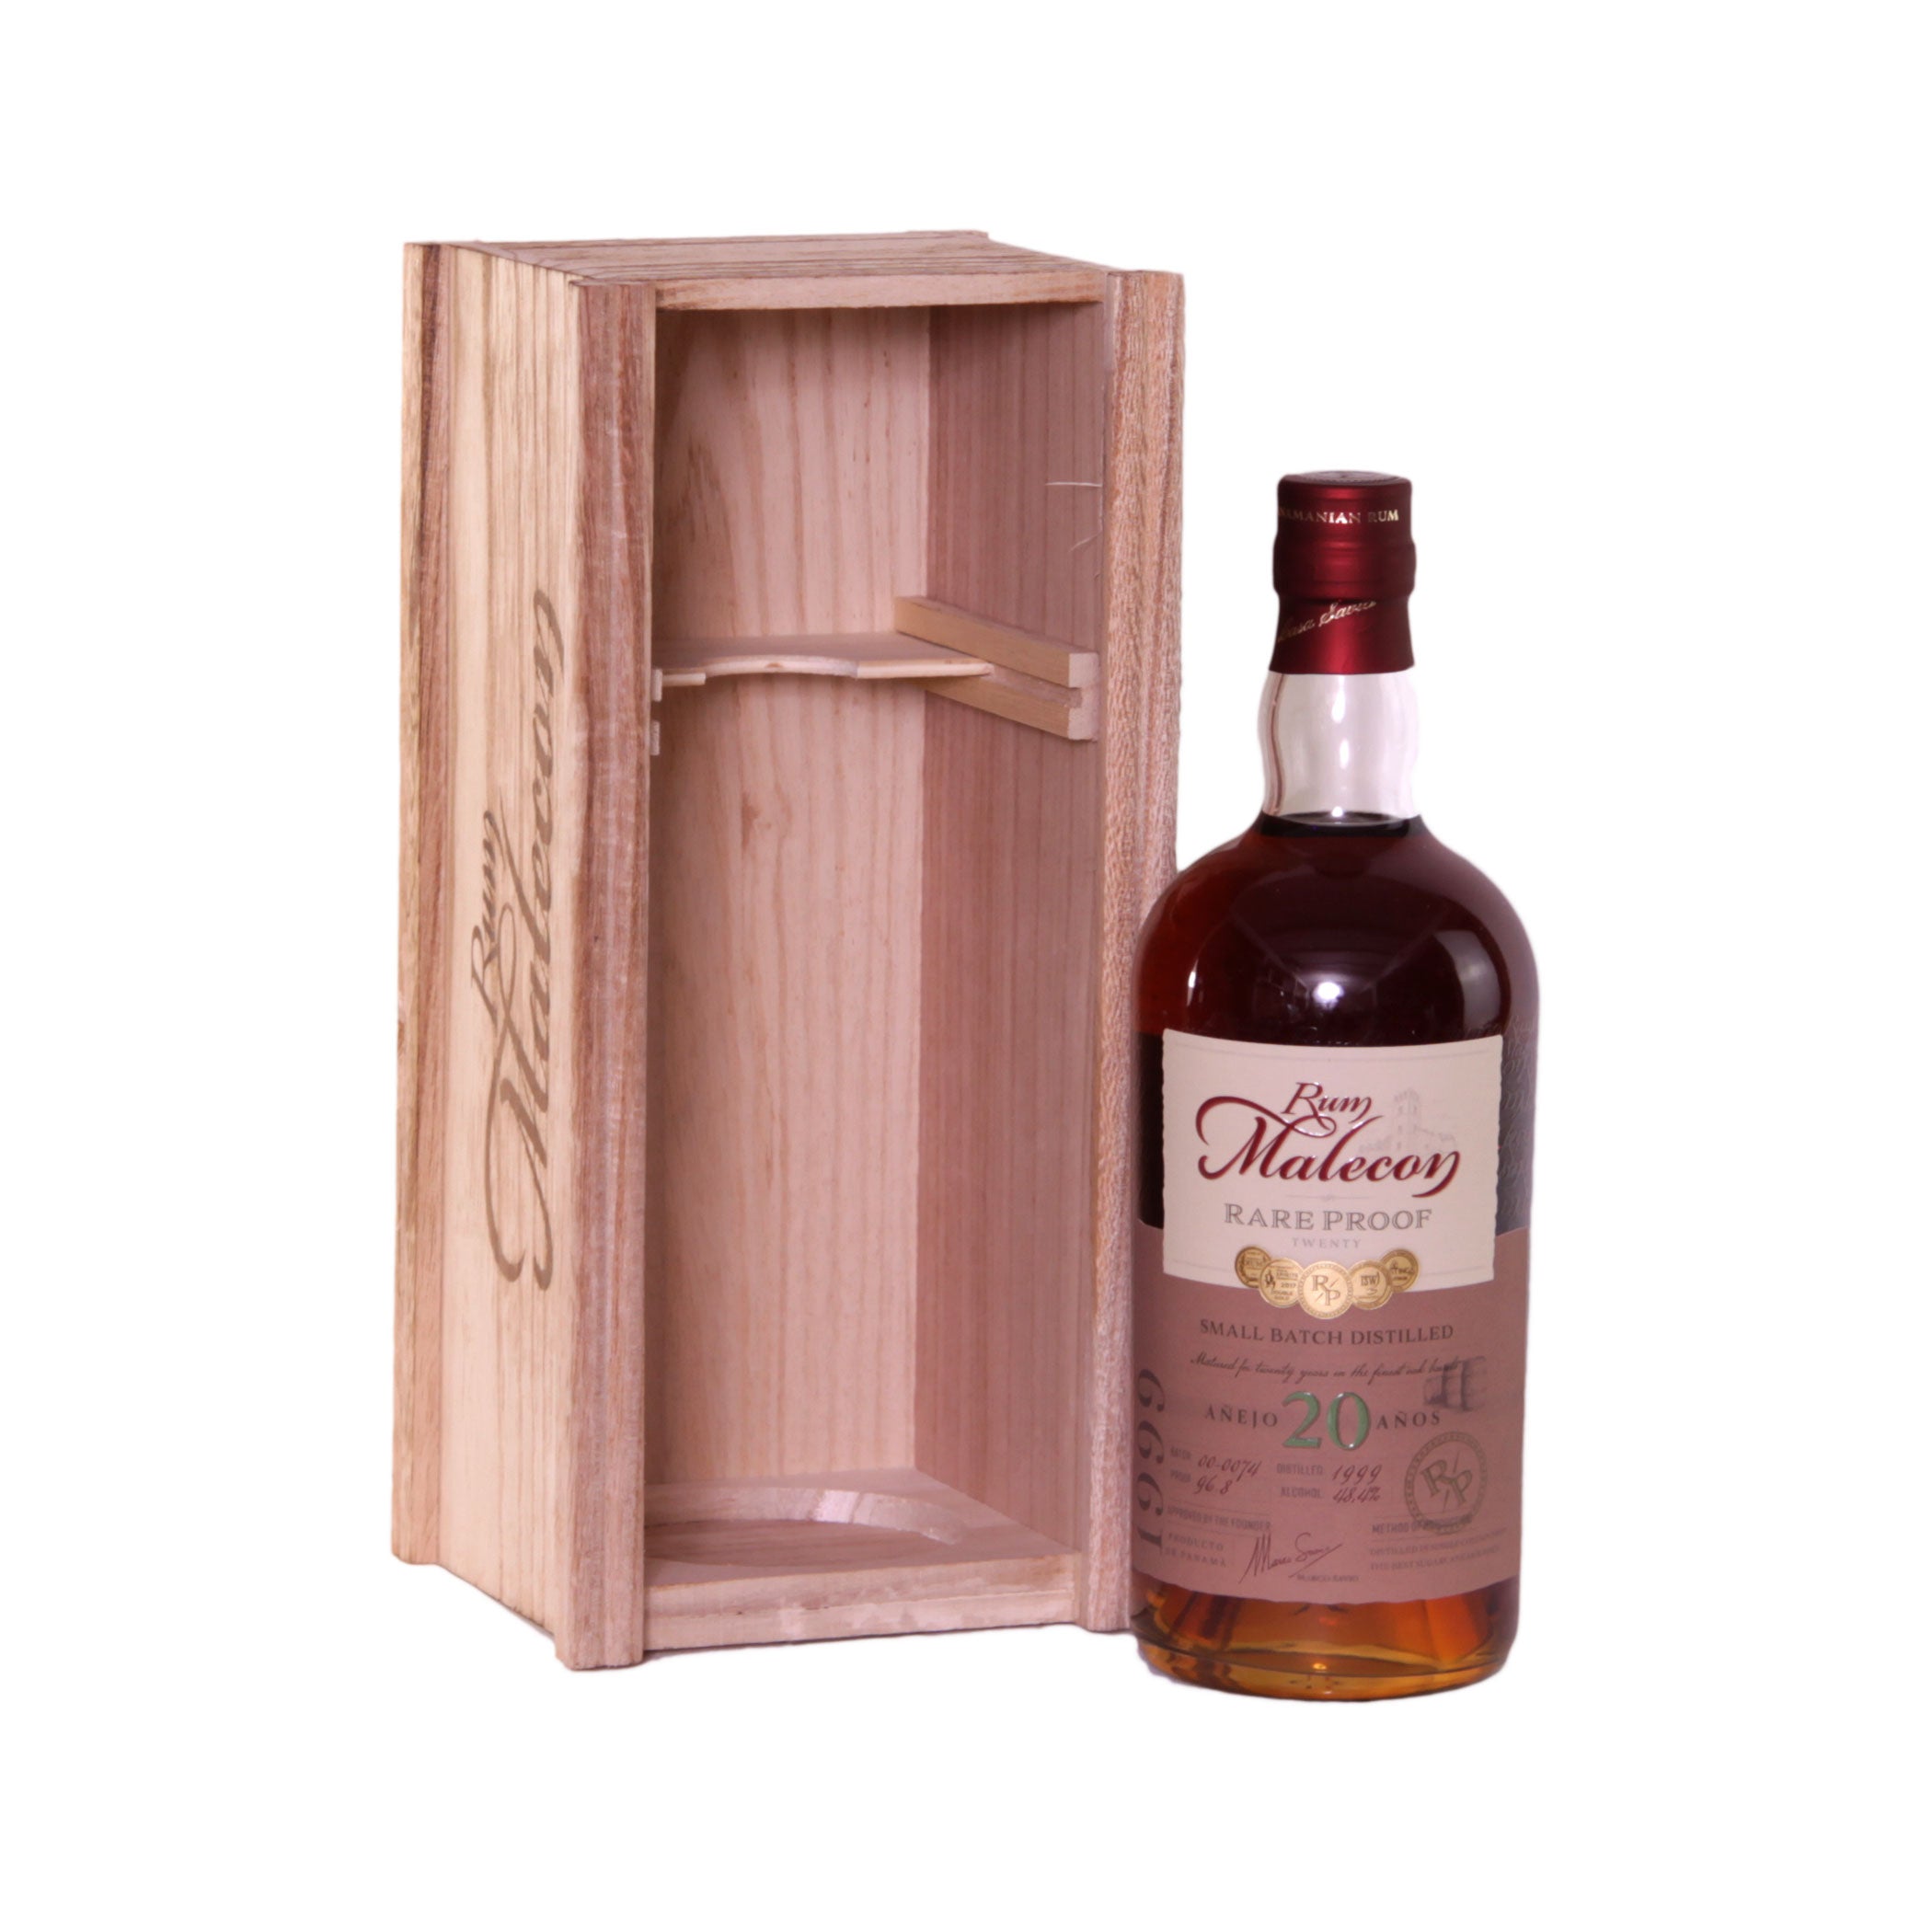 Rum Malecon Añejo 20 Años RARE PROOF 1999 48,4% Vol. 0,7l in Giftbox